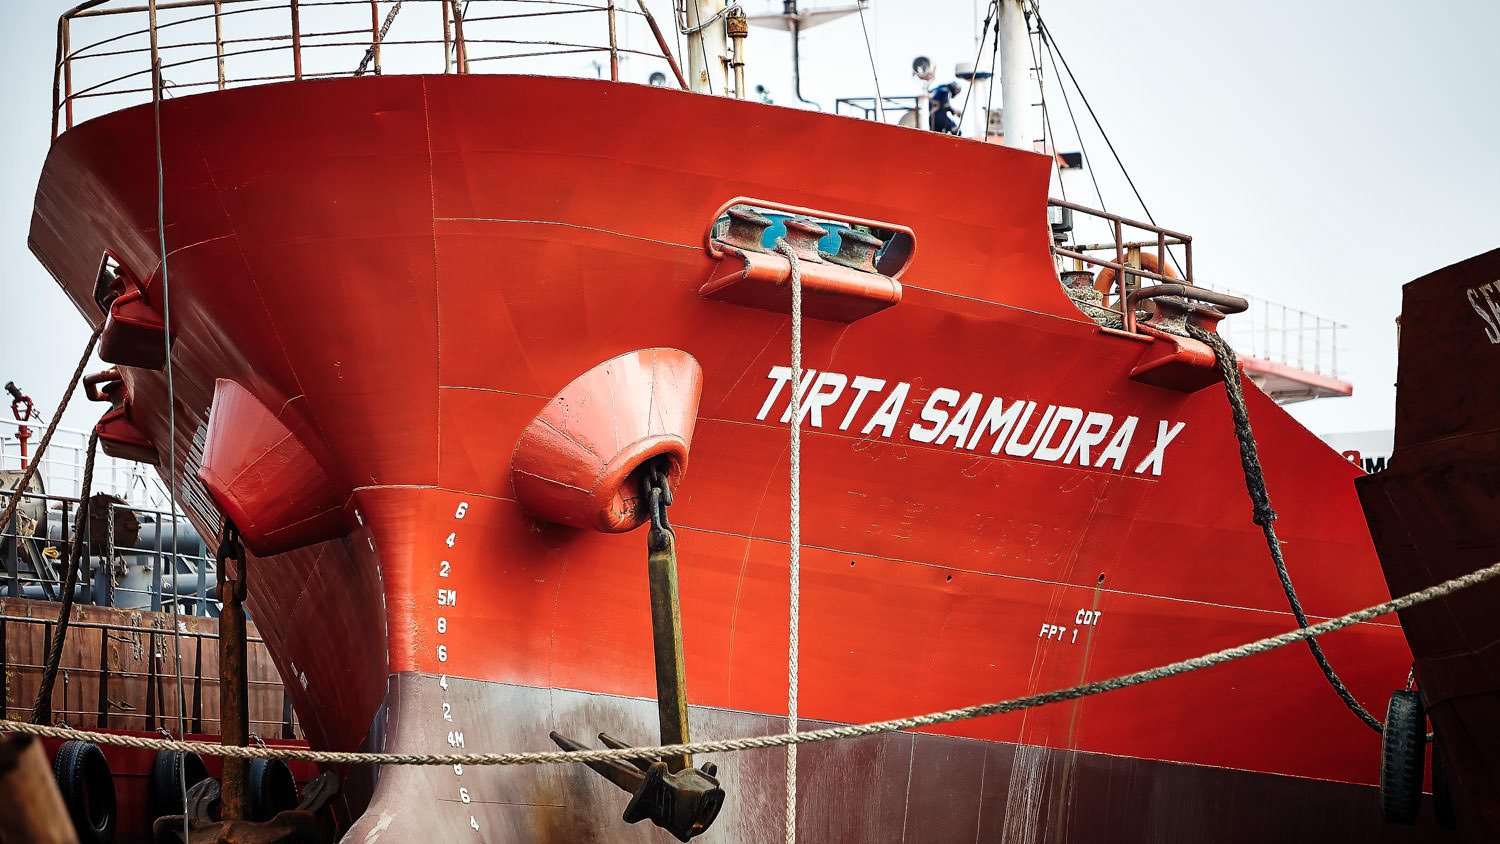 Kapal Ship Vessel SPOB Tanker Tugboat Barge Tongkang PT Usda Seroja Jaya Rengat Batam Shipyard Shipping Indonesia